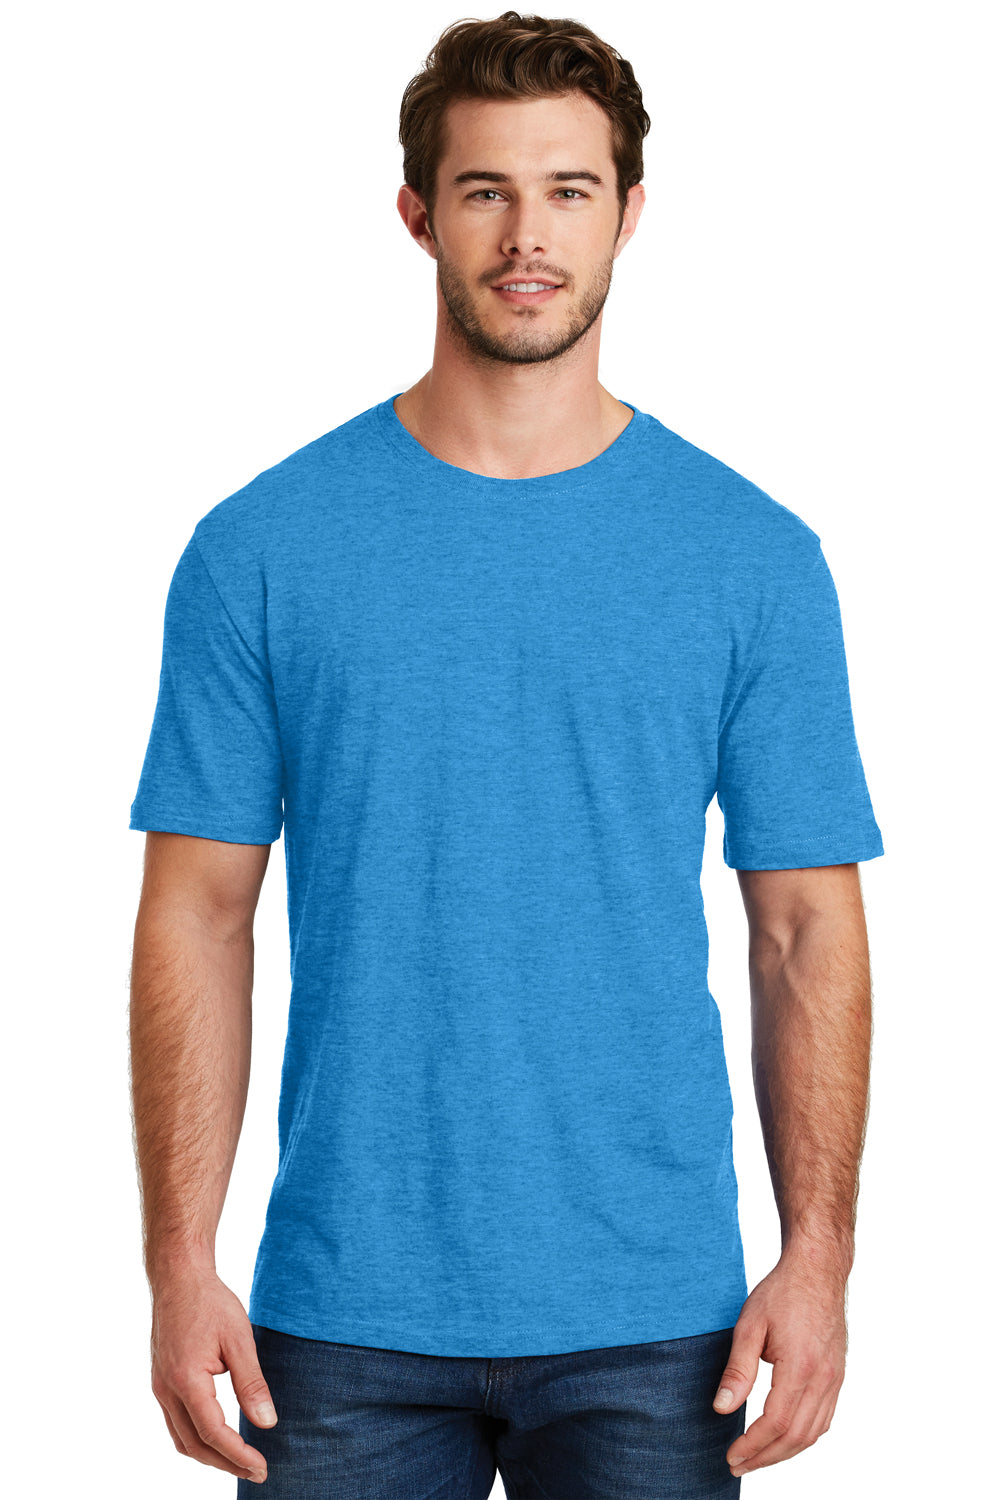 District DM108 Mens Perfect Blend Short Sleeve Crewneck T-Shirt Heather Turquoise Blue Front